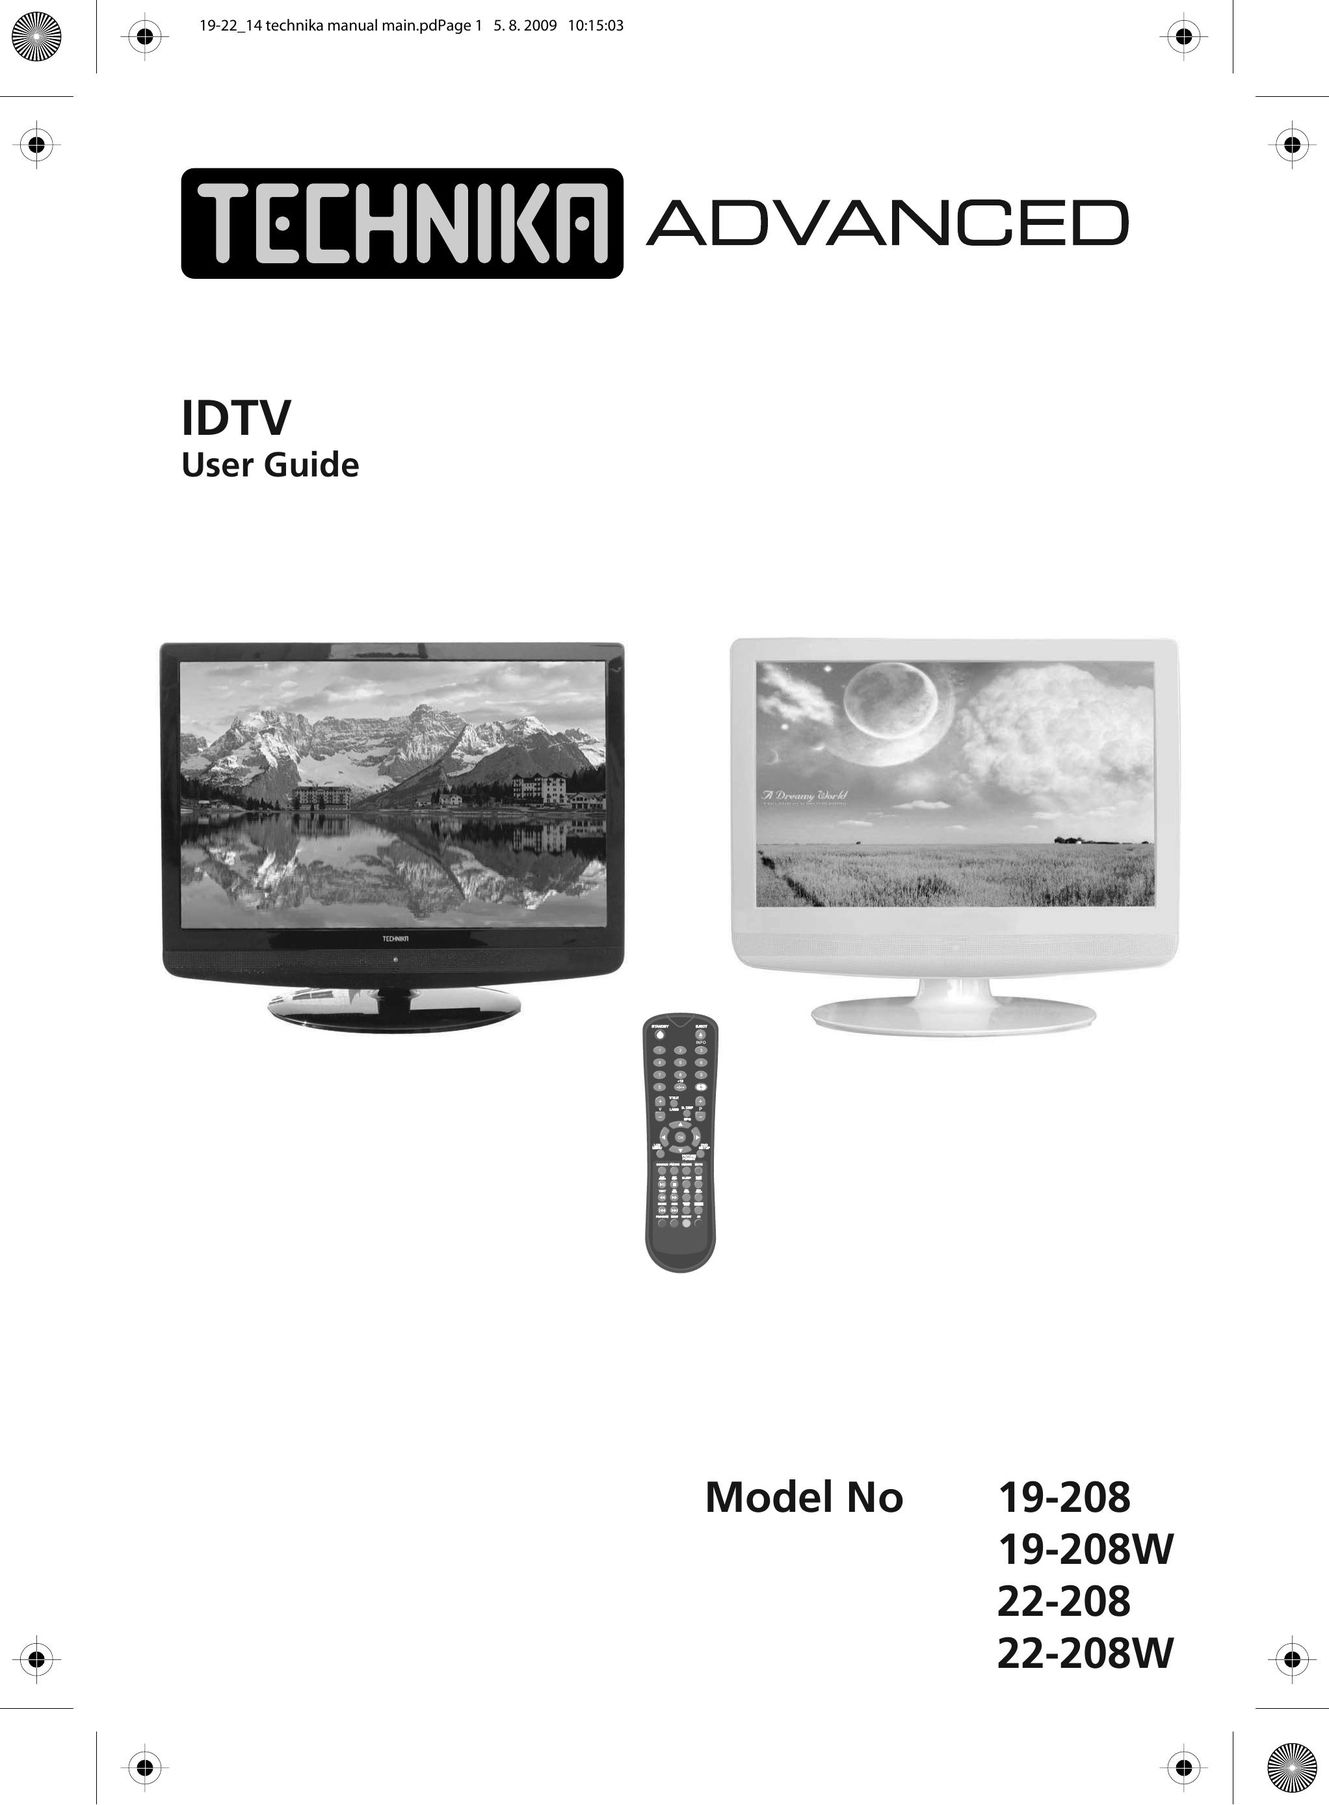 Technika 22-208W Flat Panel Television User Manual